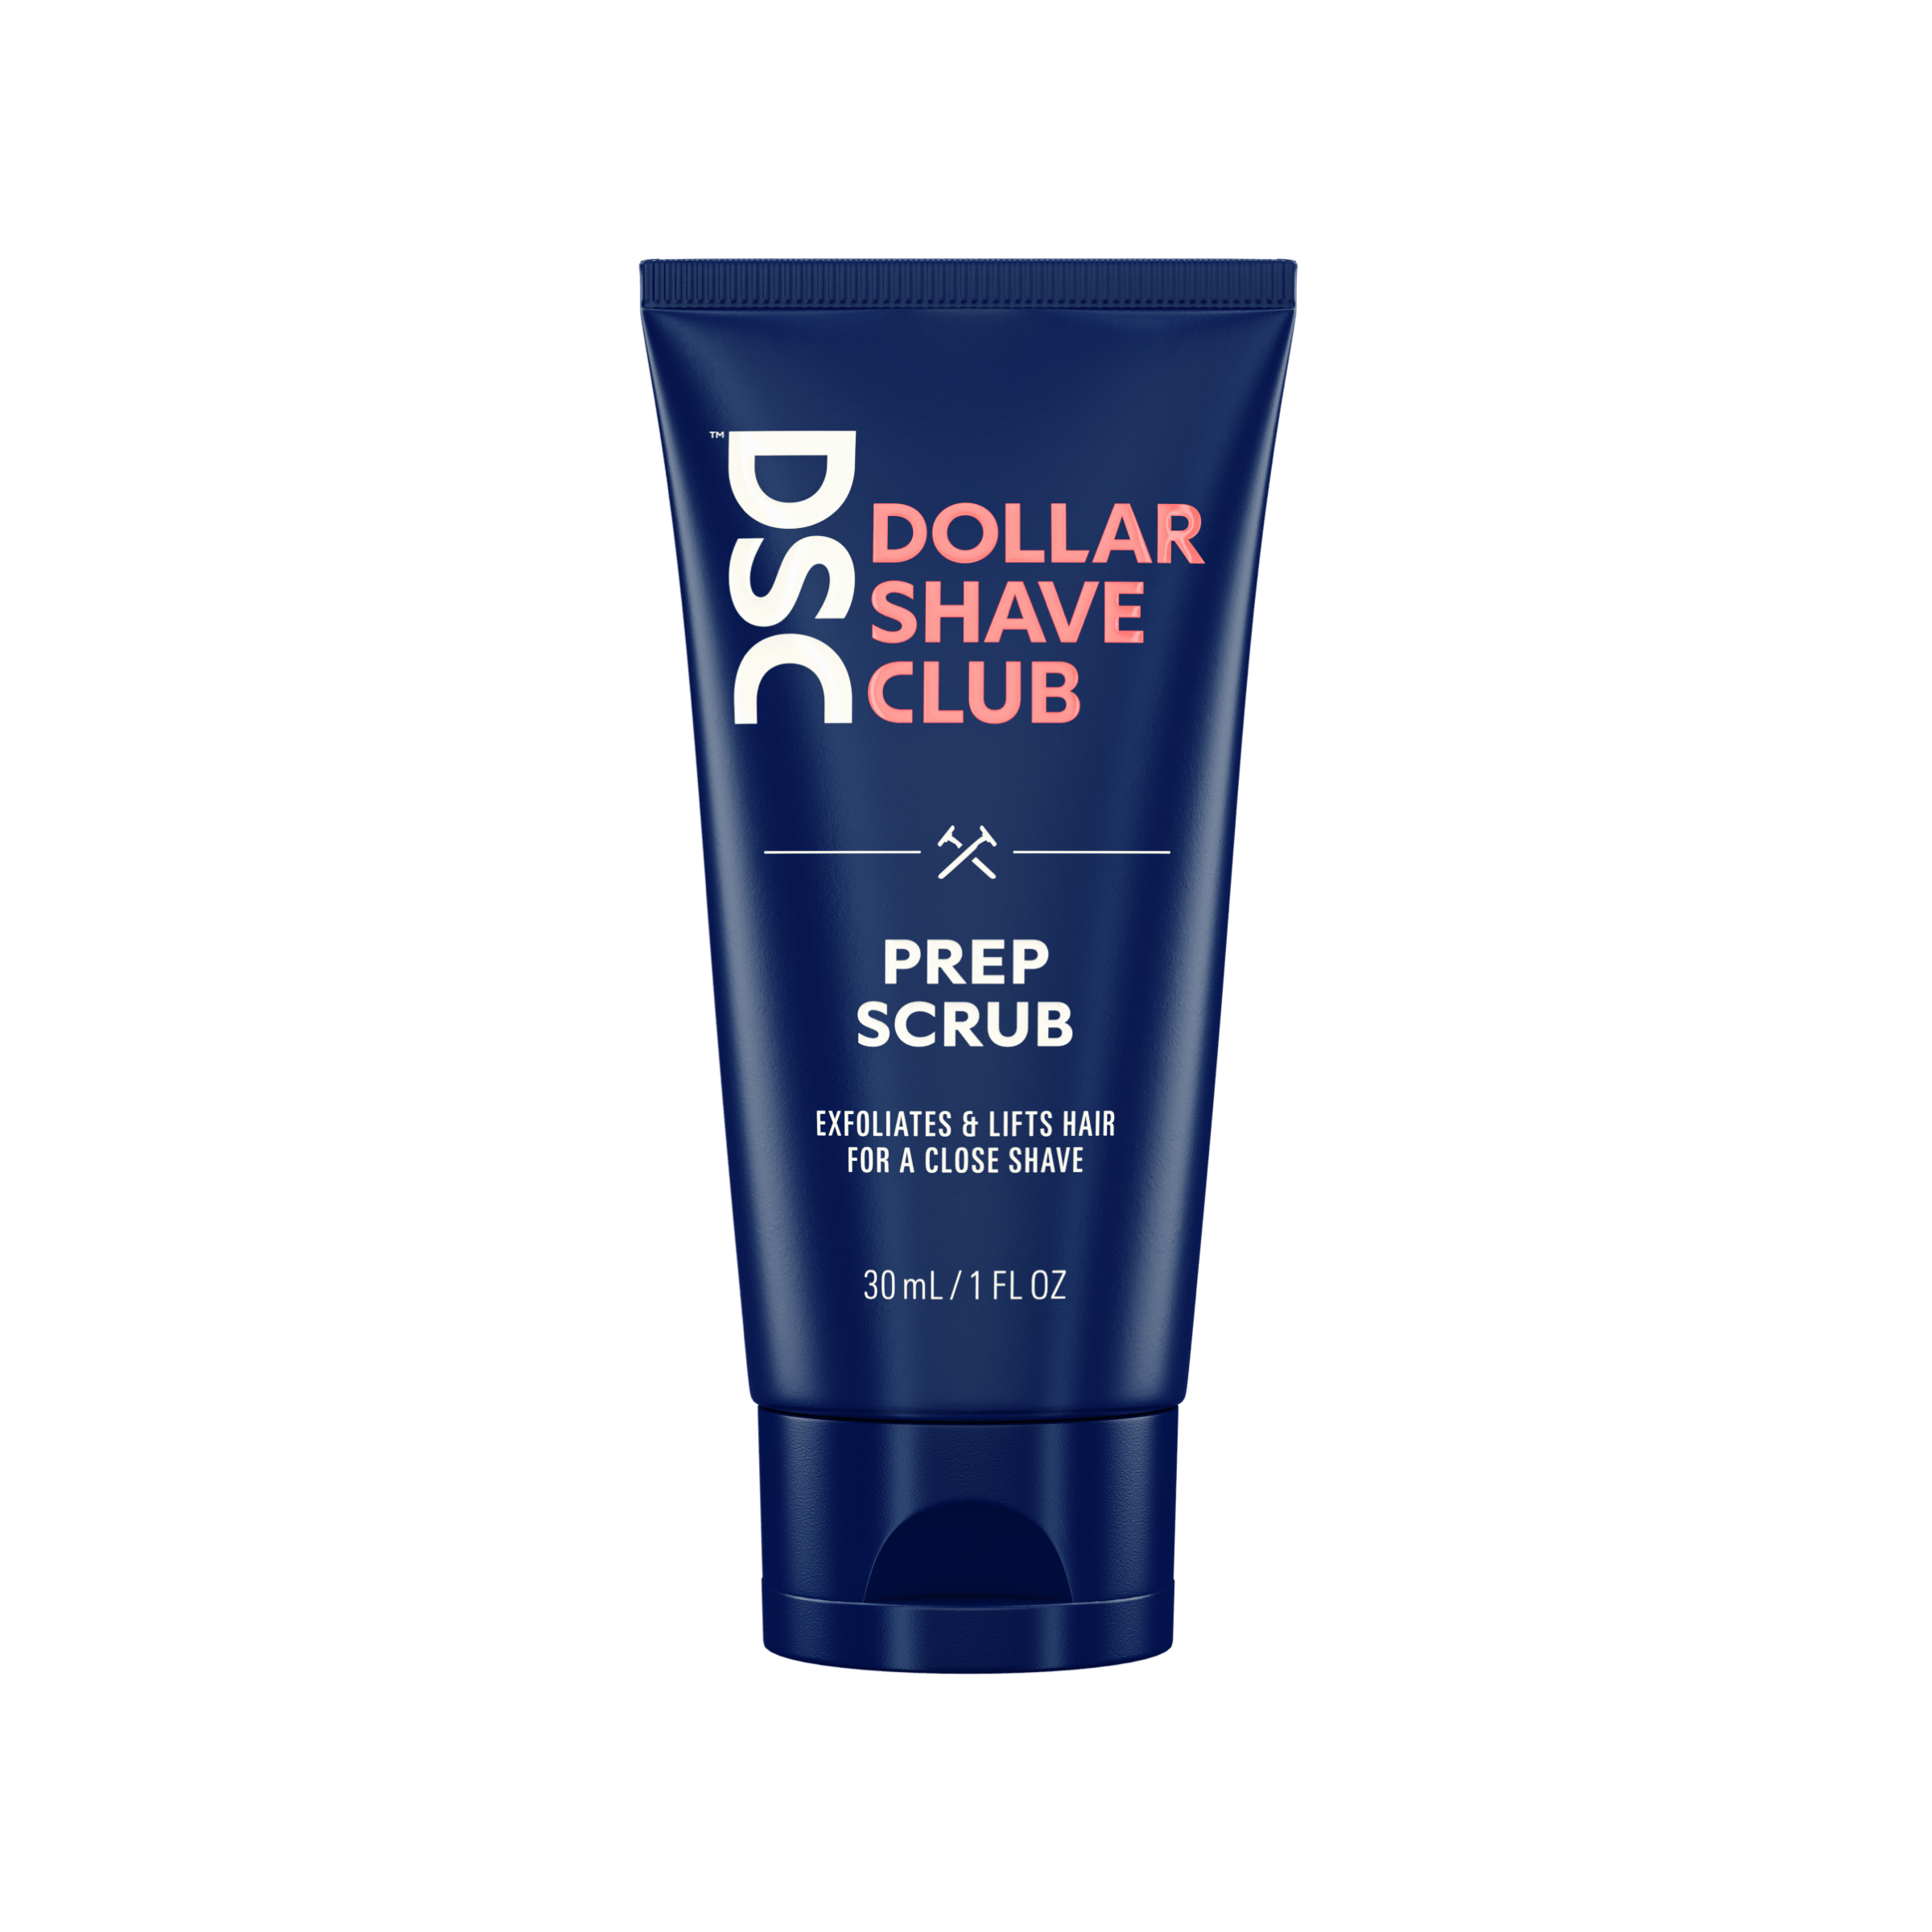 Dollar Shave Club Prep Scrub trial size product image against blank backdrop.